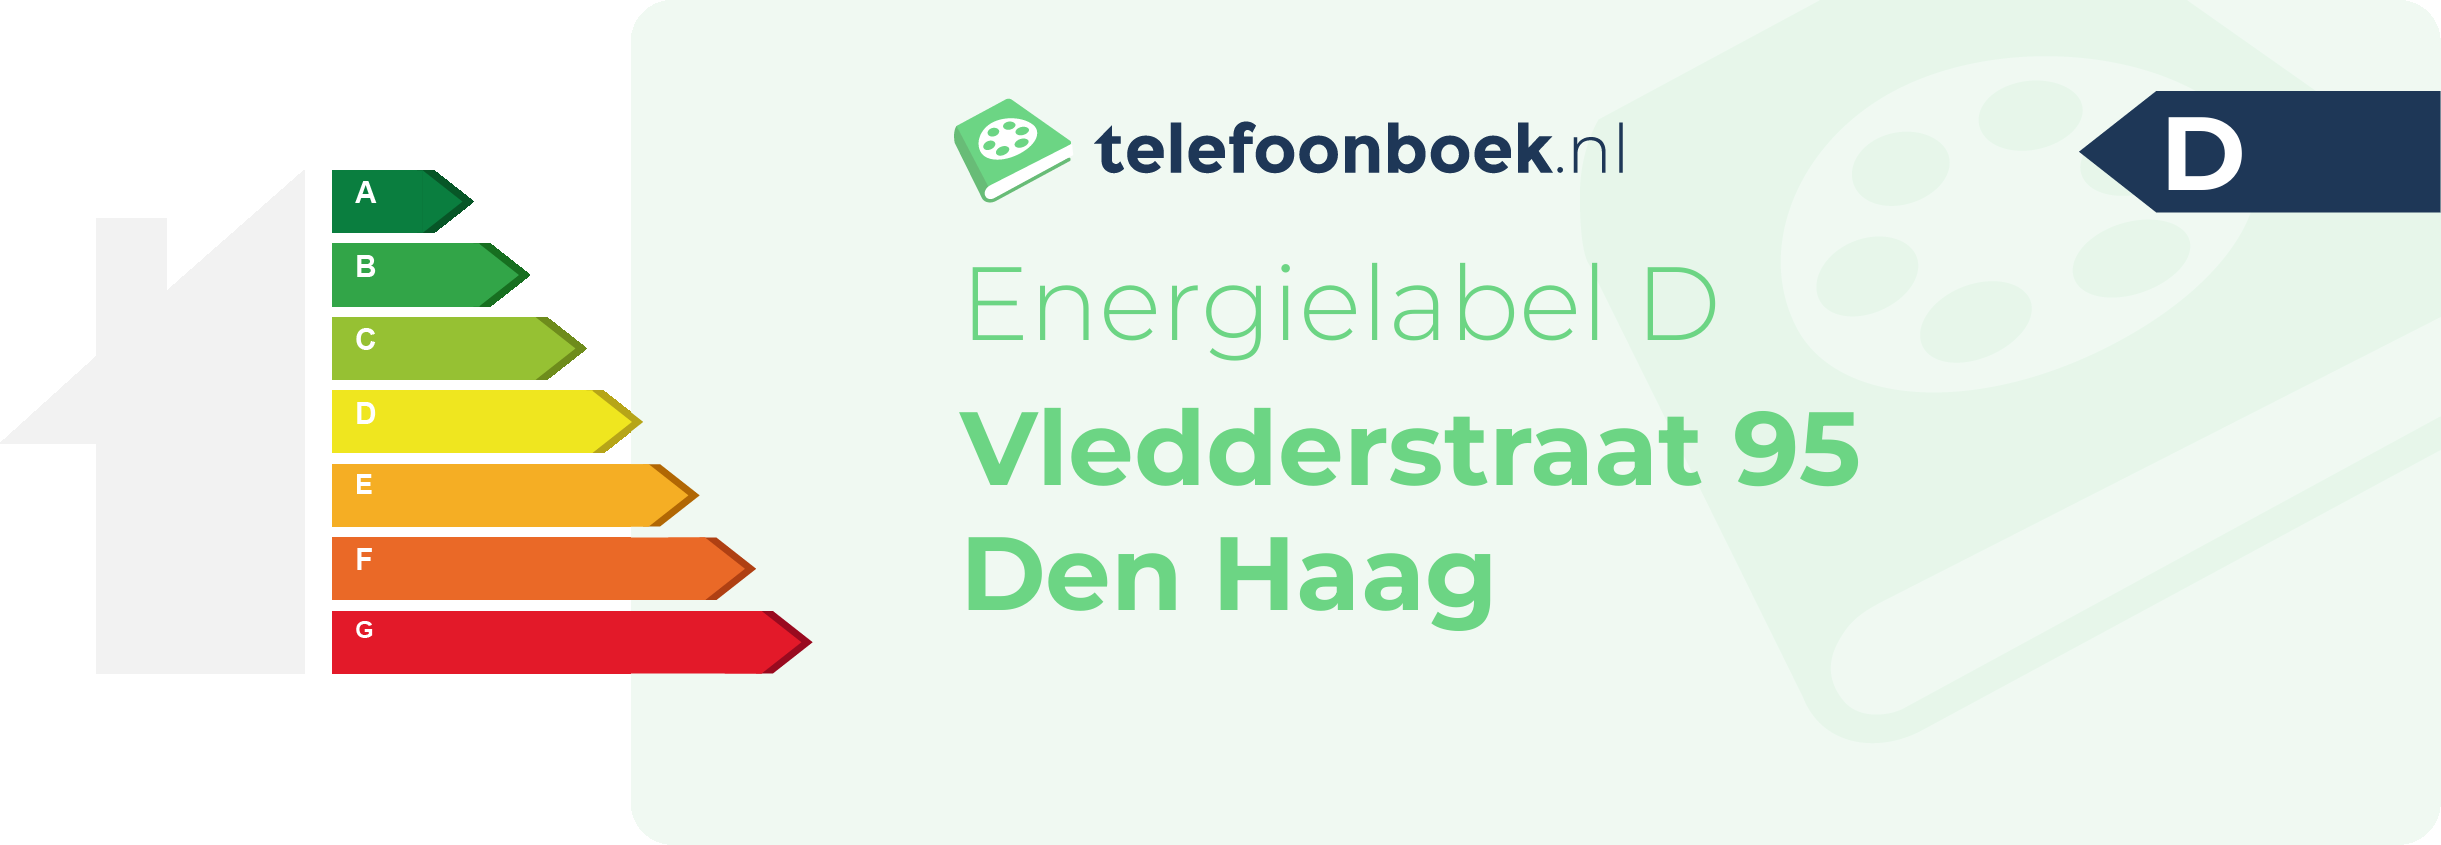 Energielabel Vledderstraat 95 Den Haag